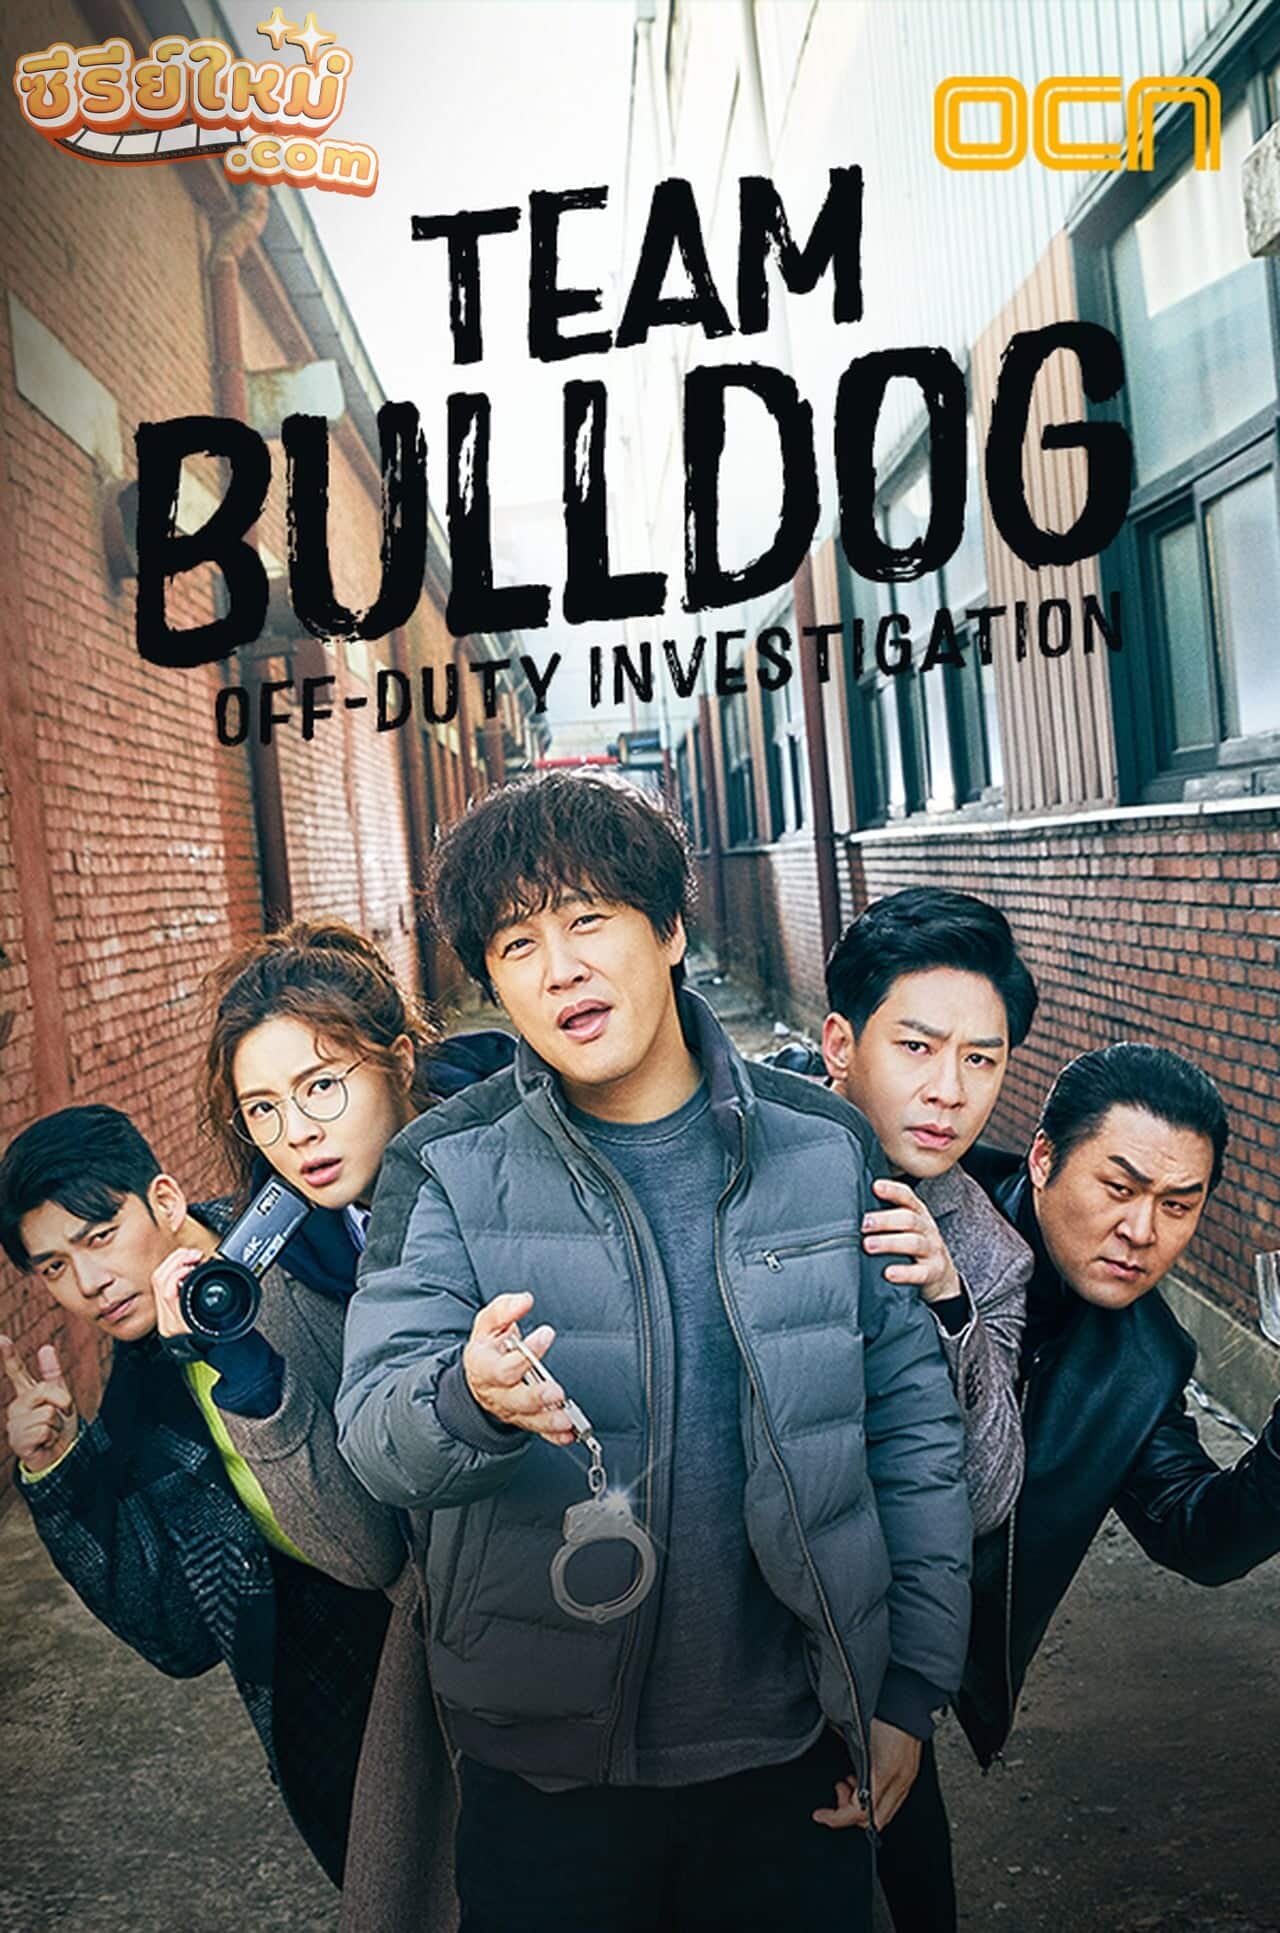 Team Bulldog : Off-duty Investigation (2020)